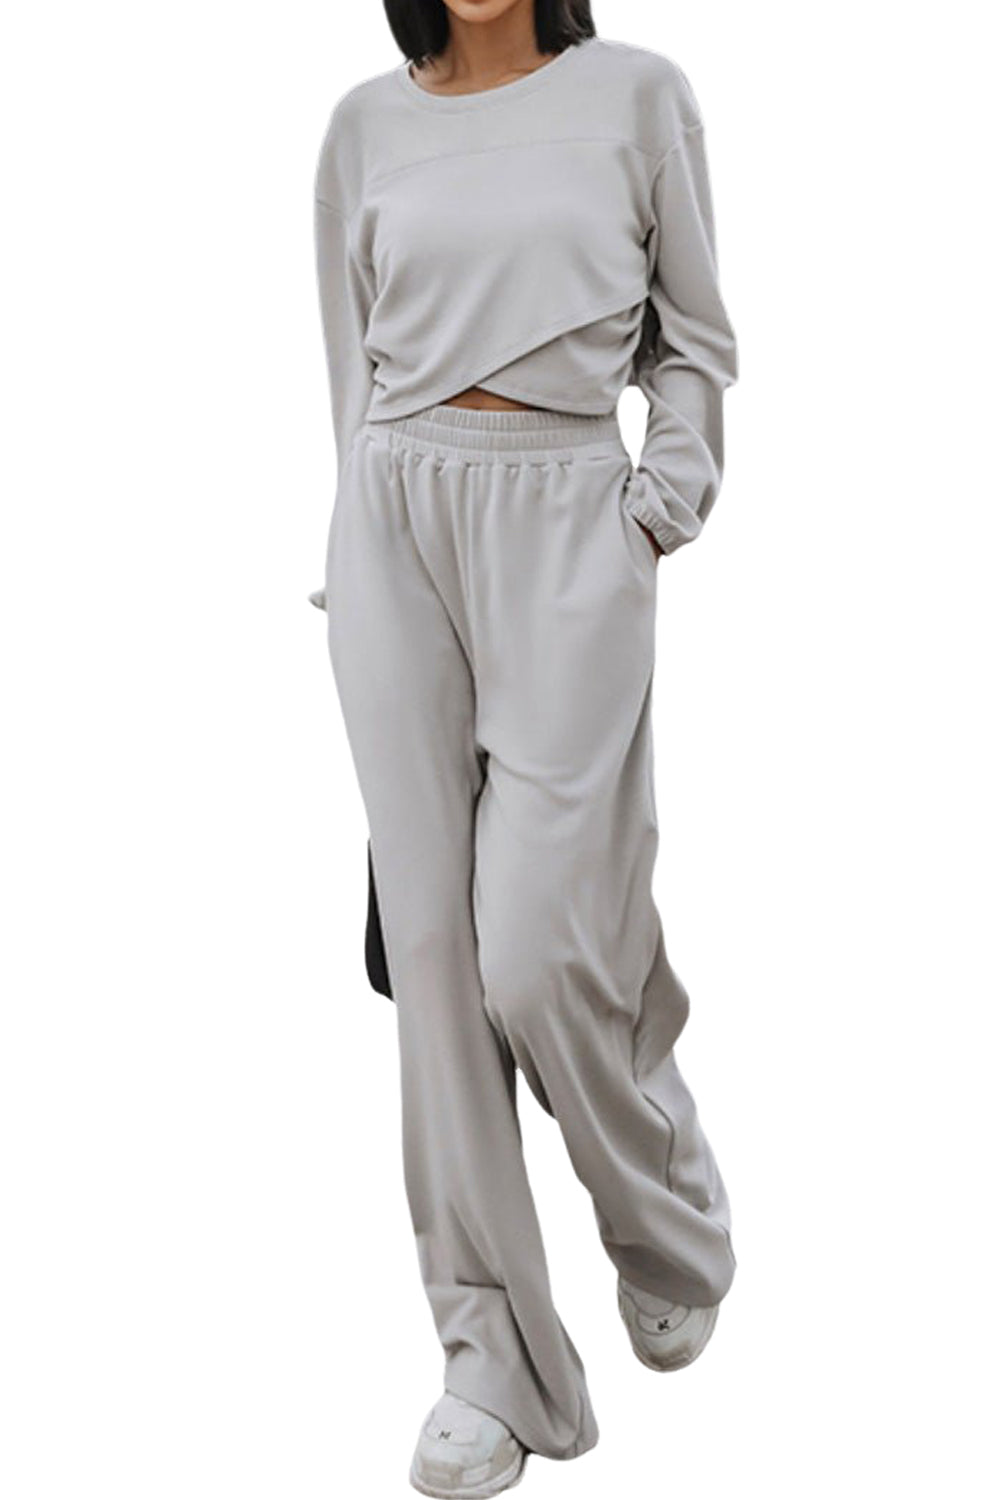 Light Grey Solid Criss Cross Crop Top and Pants Active Set